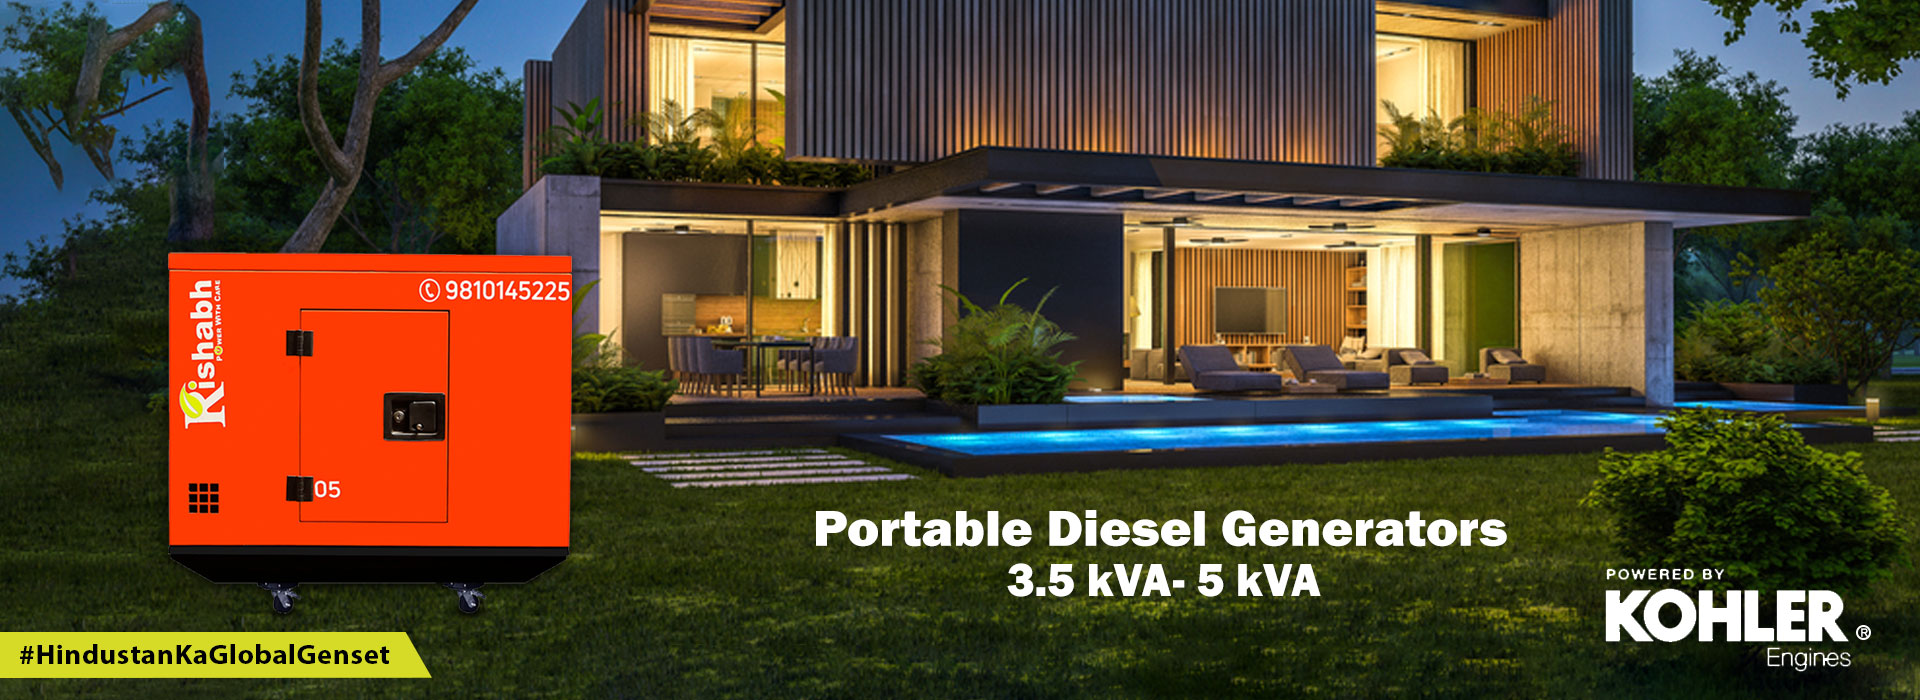 portable diesel generator 3.5kva - 5kva